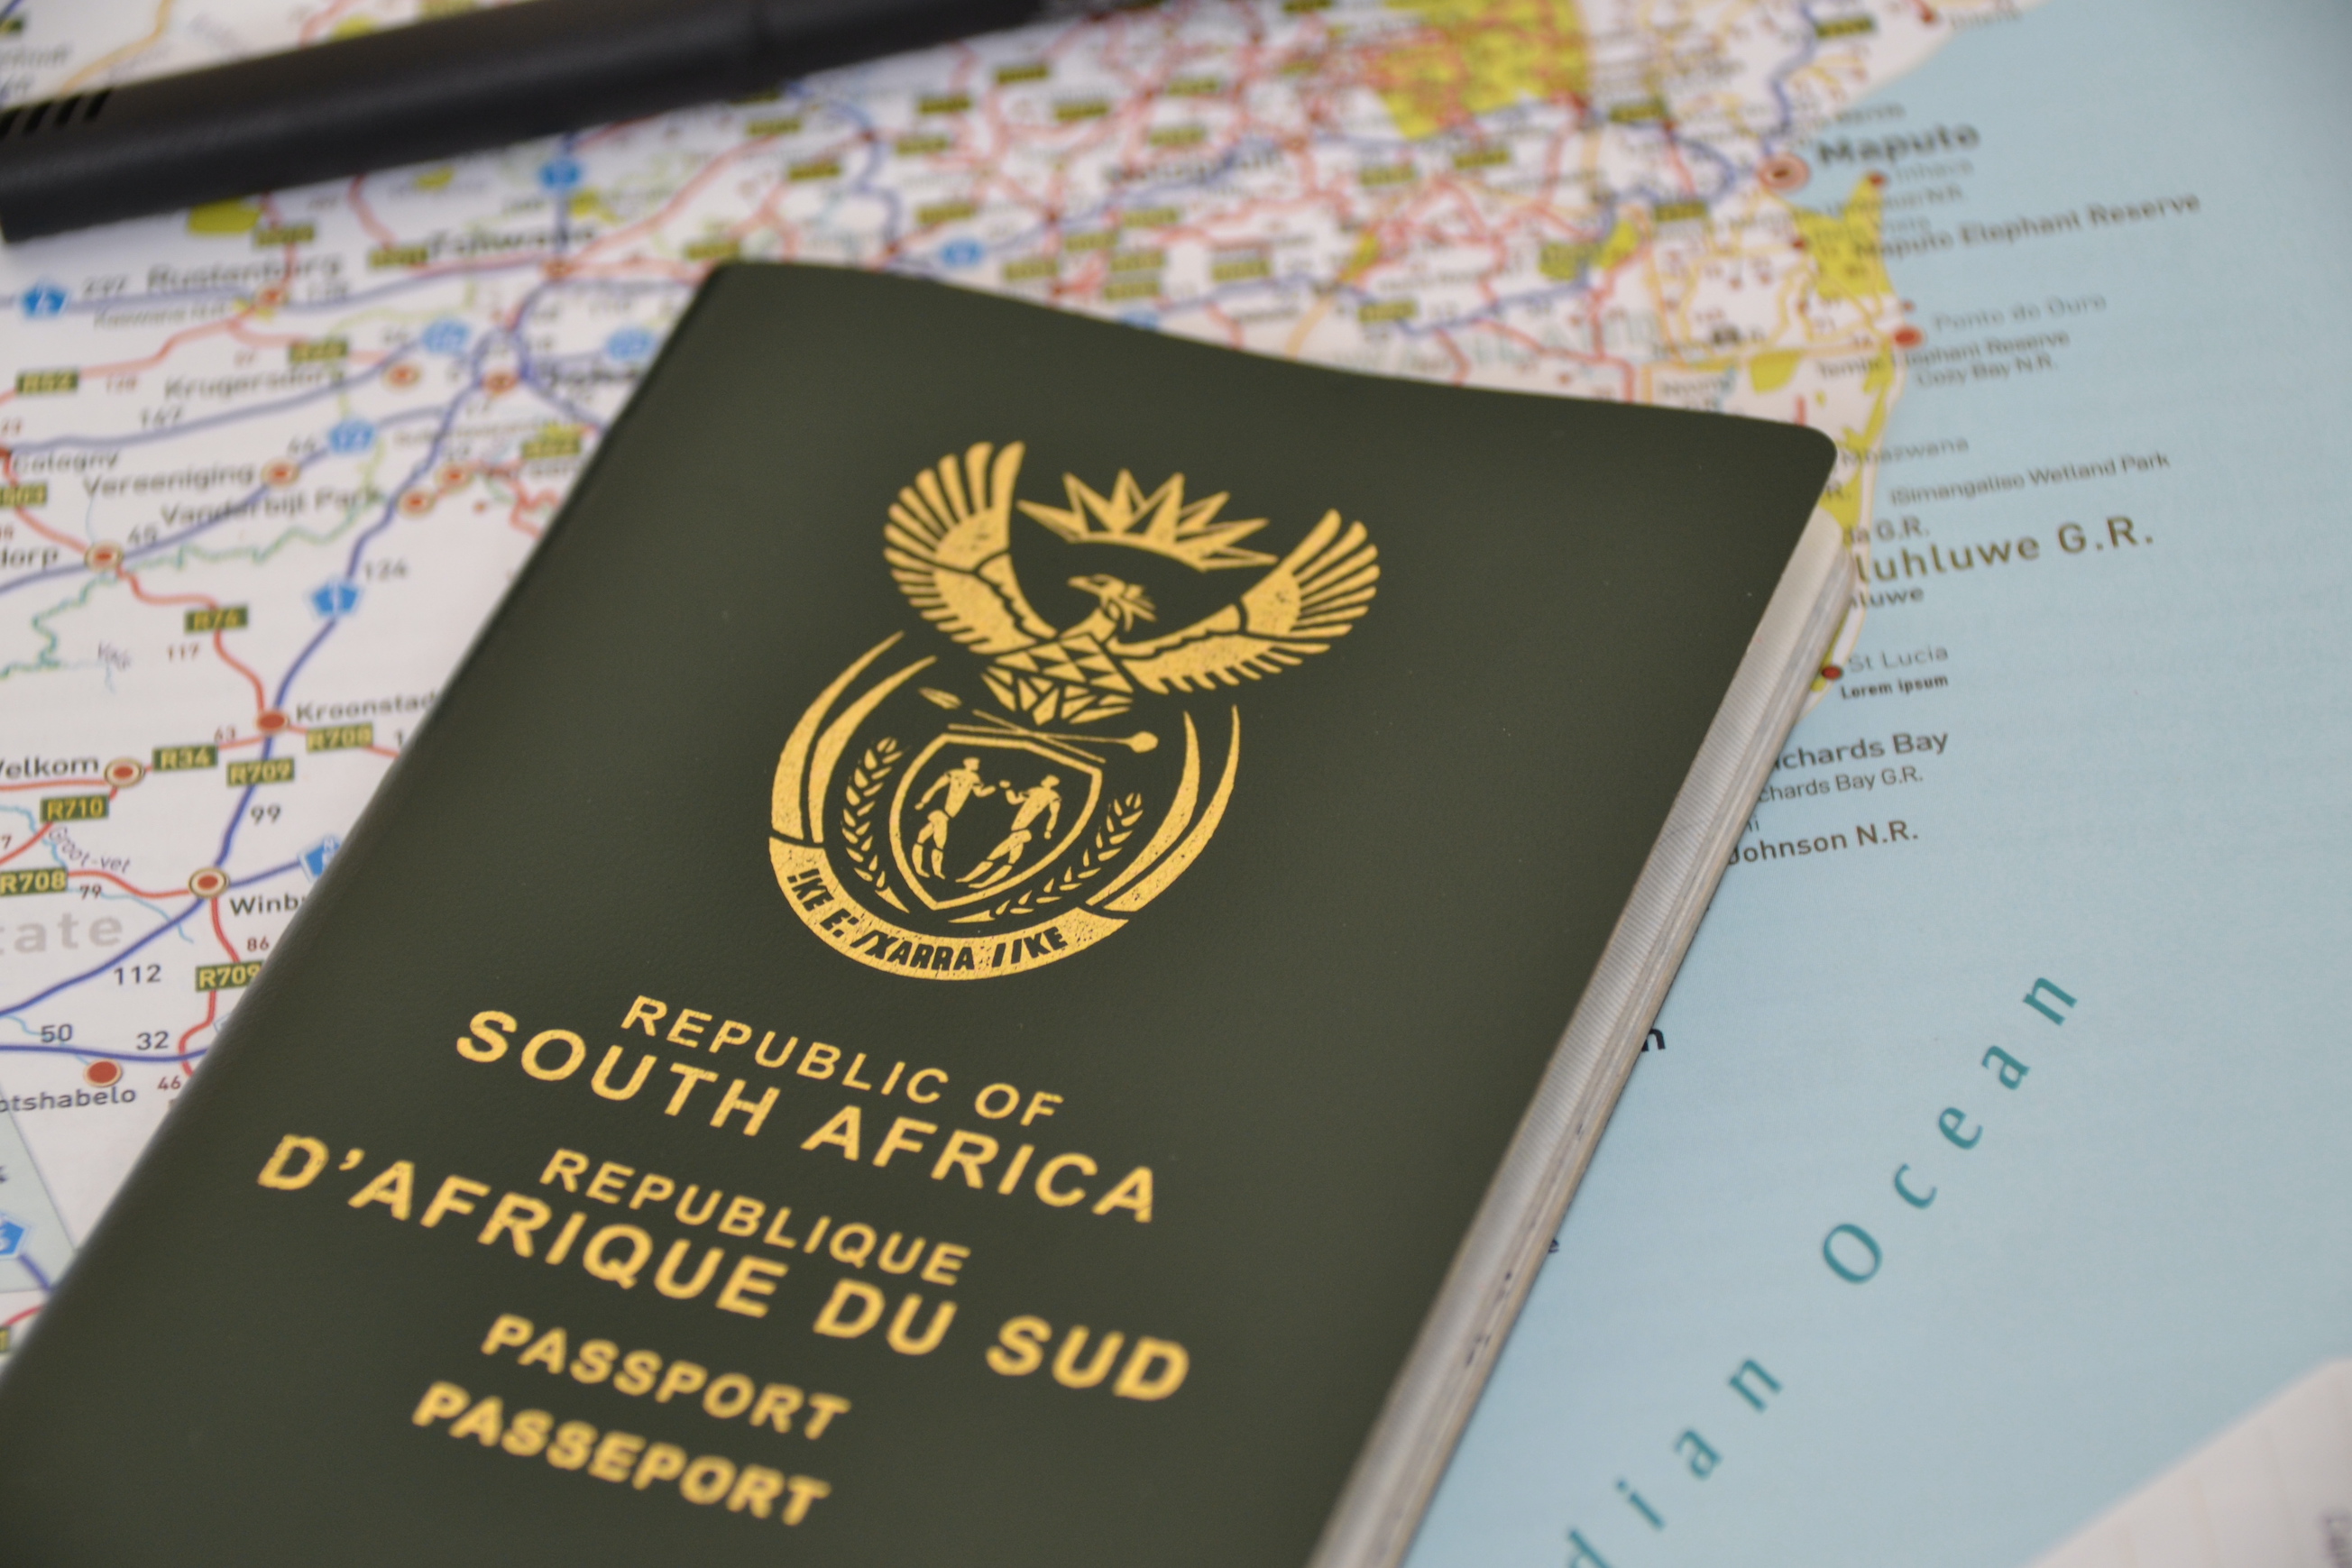 Passport Index - Expensive Place